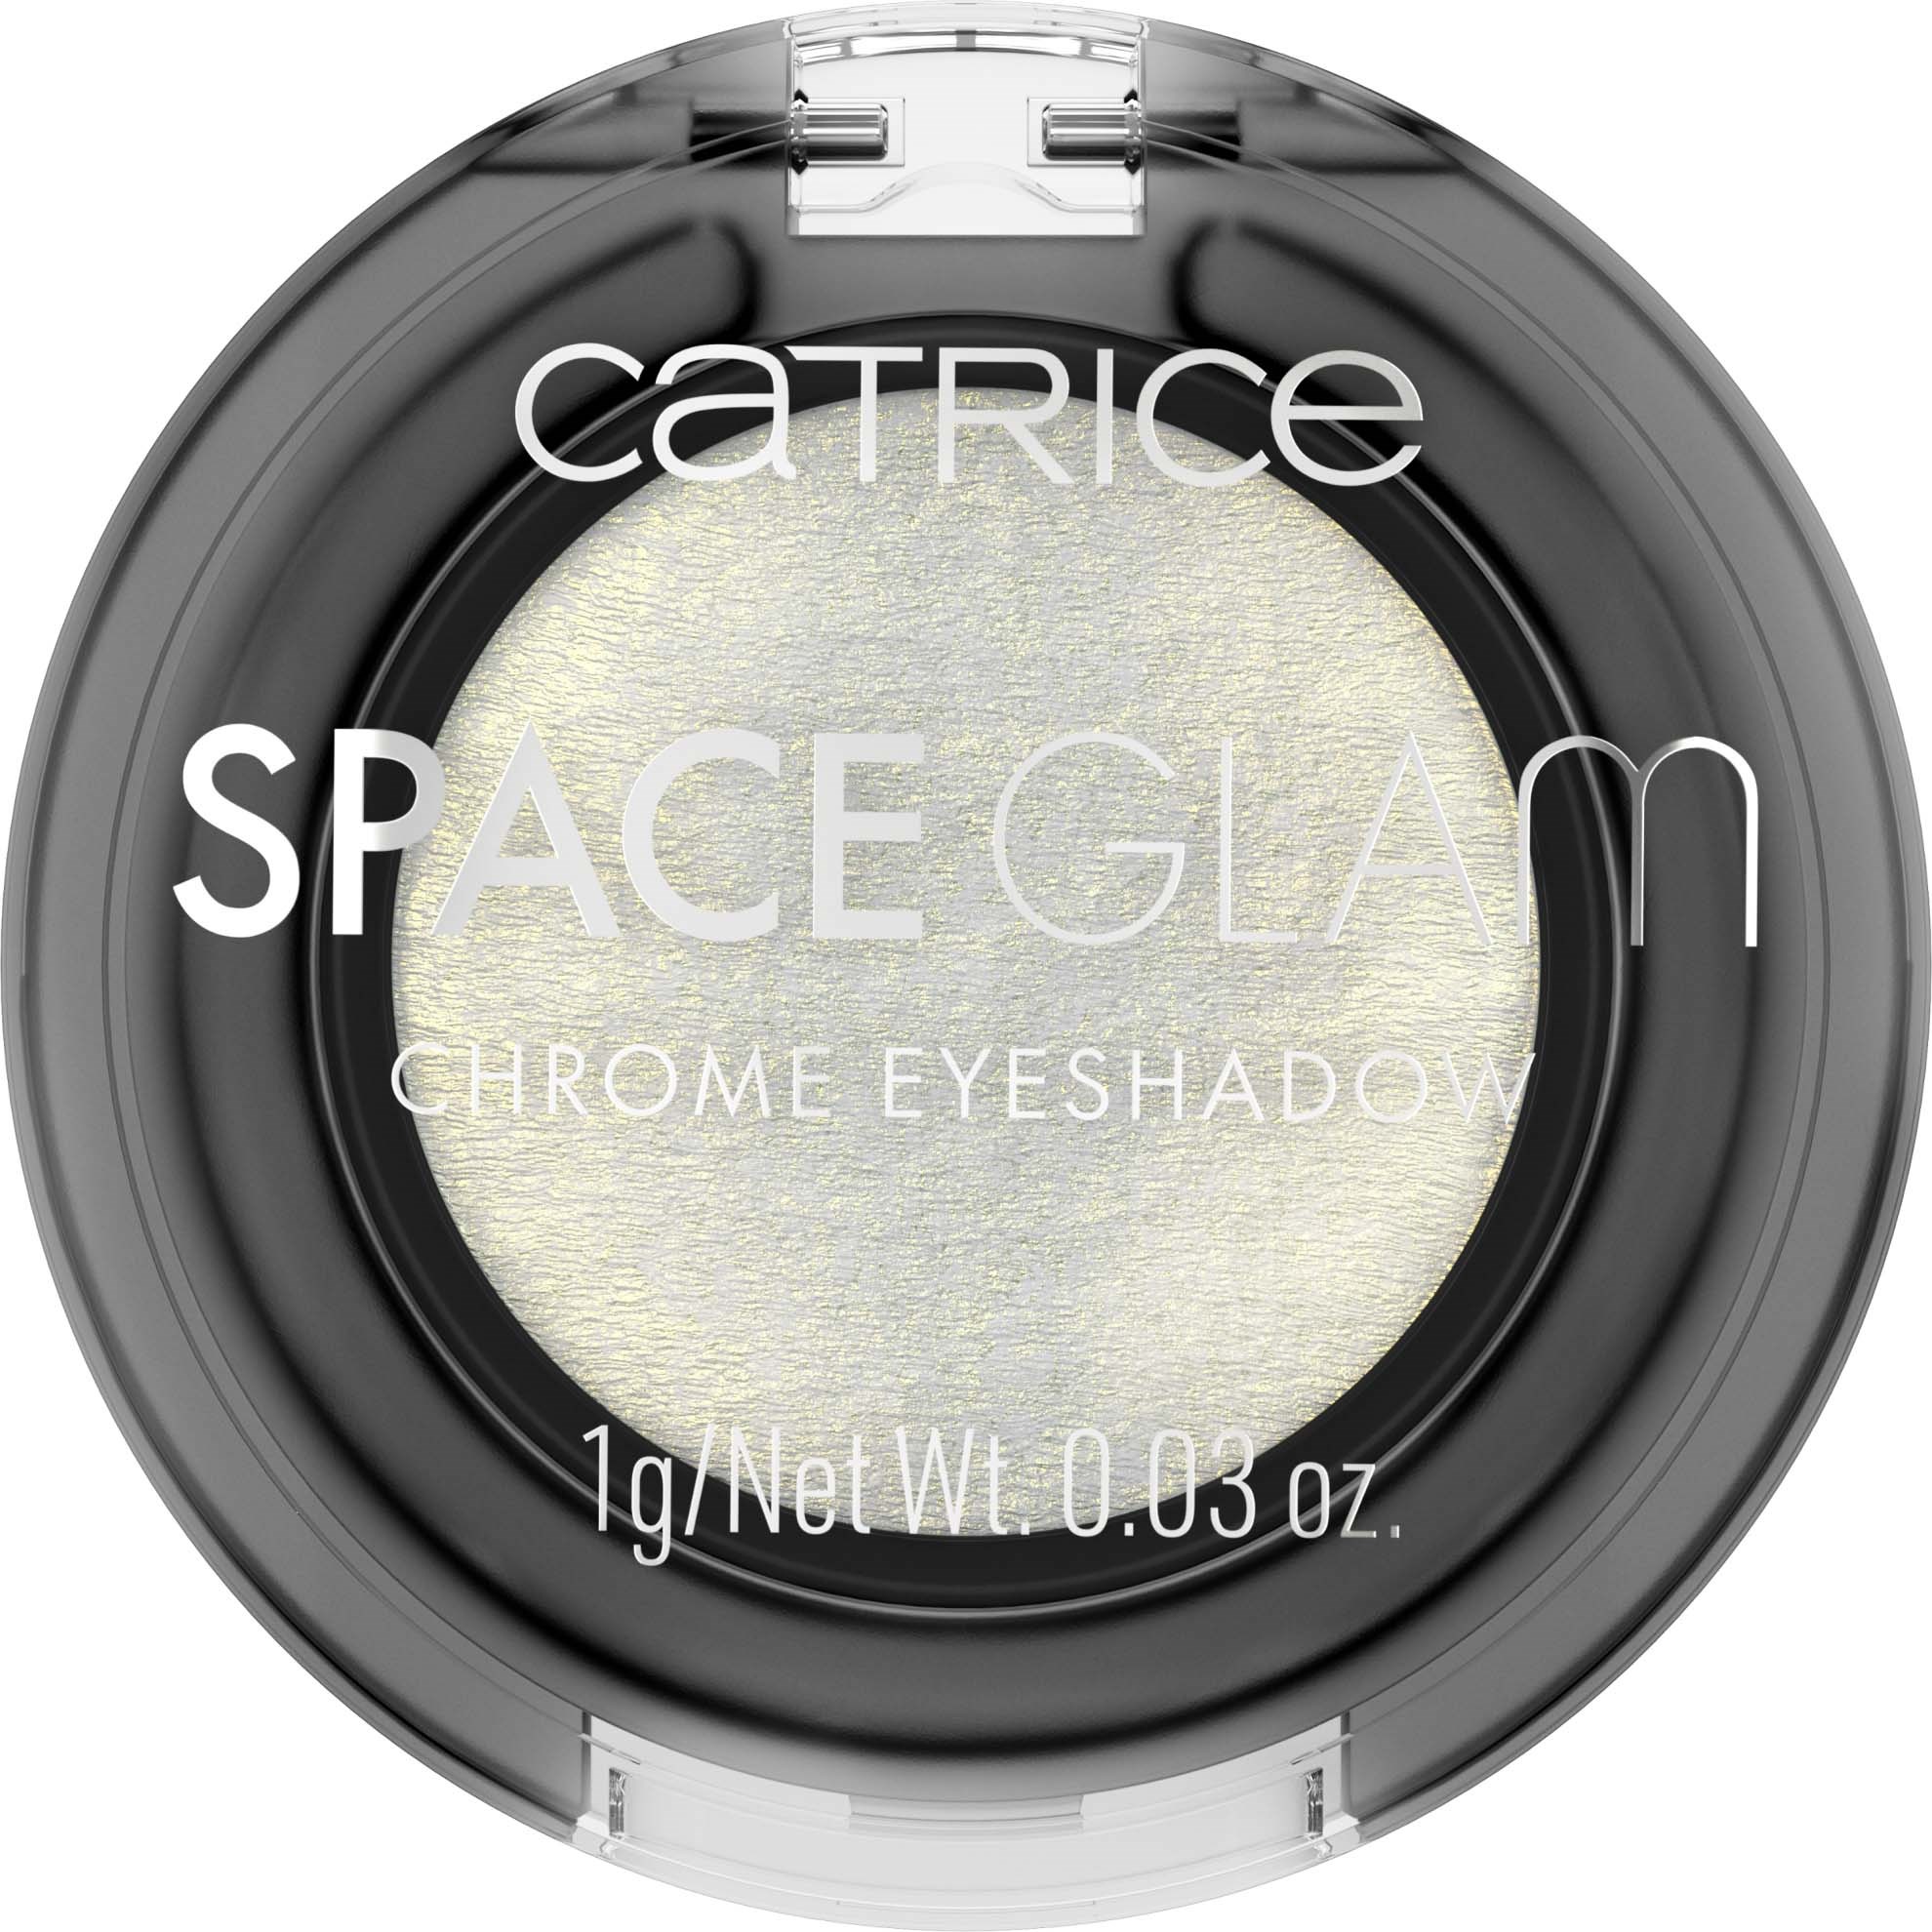 Läs mer om Catrice Space Glam Chrome Eyeshadow 010 Moonlight Glow